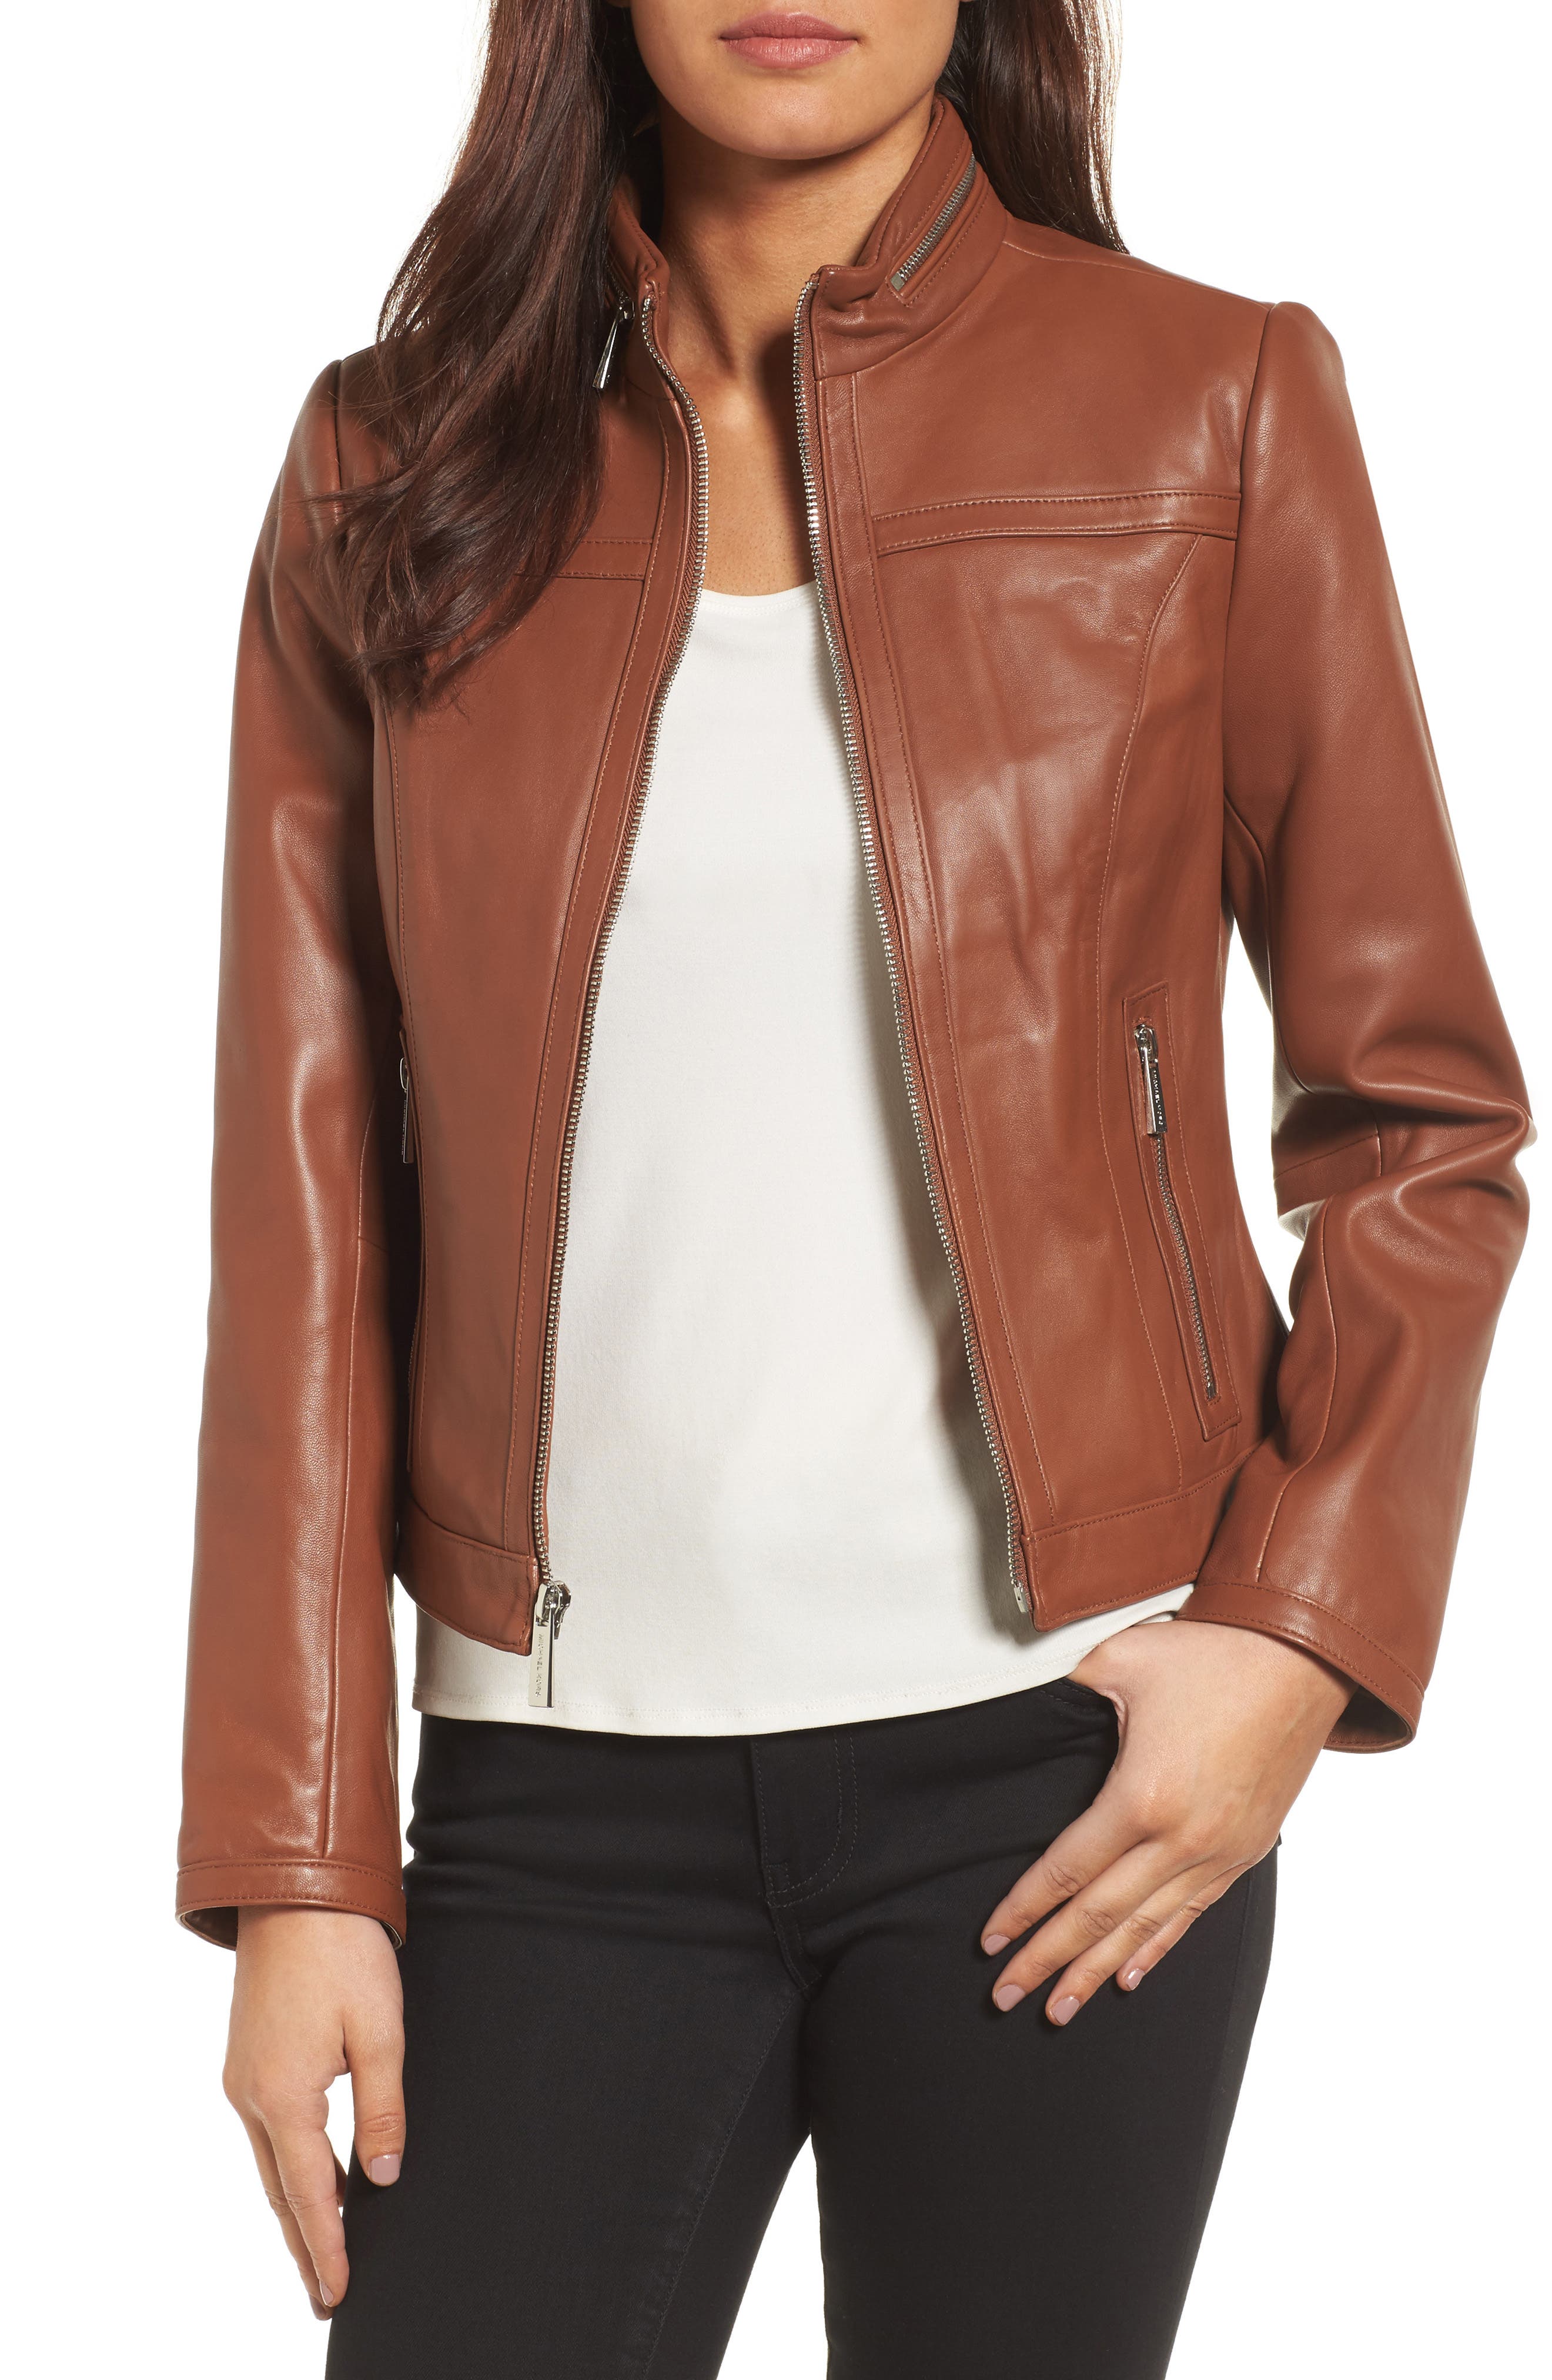 michael kors tan leather jacket